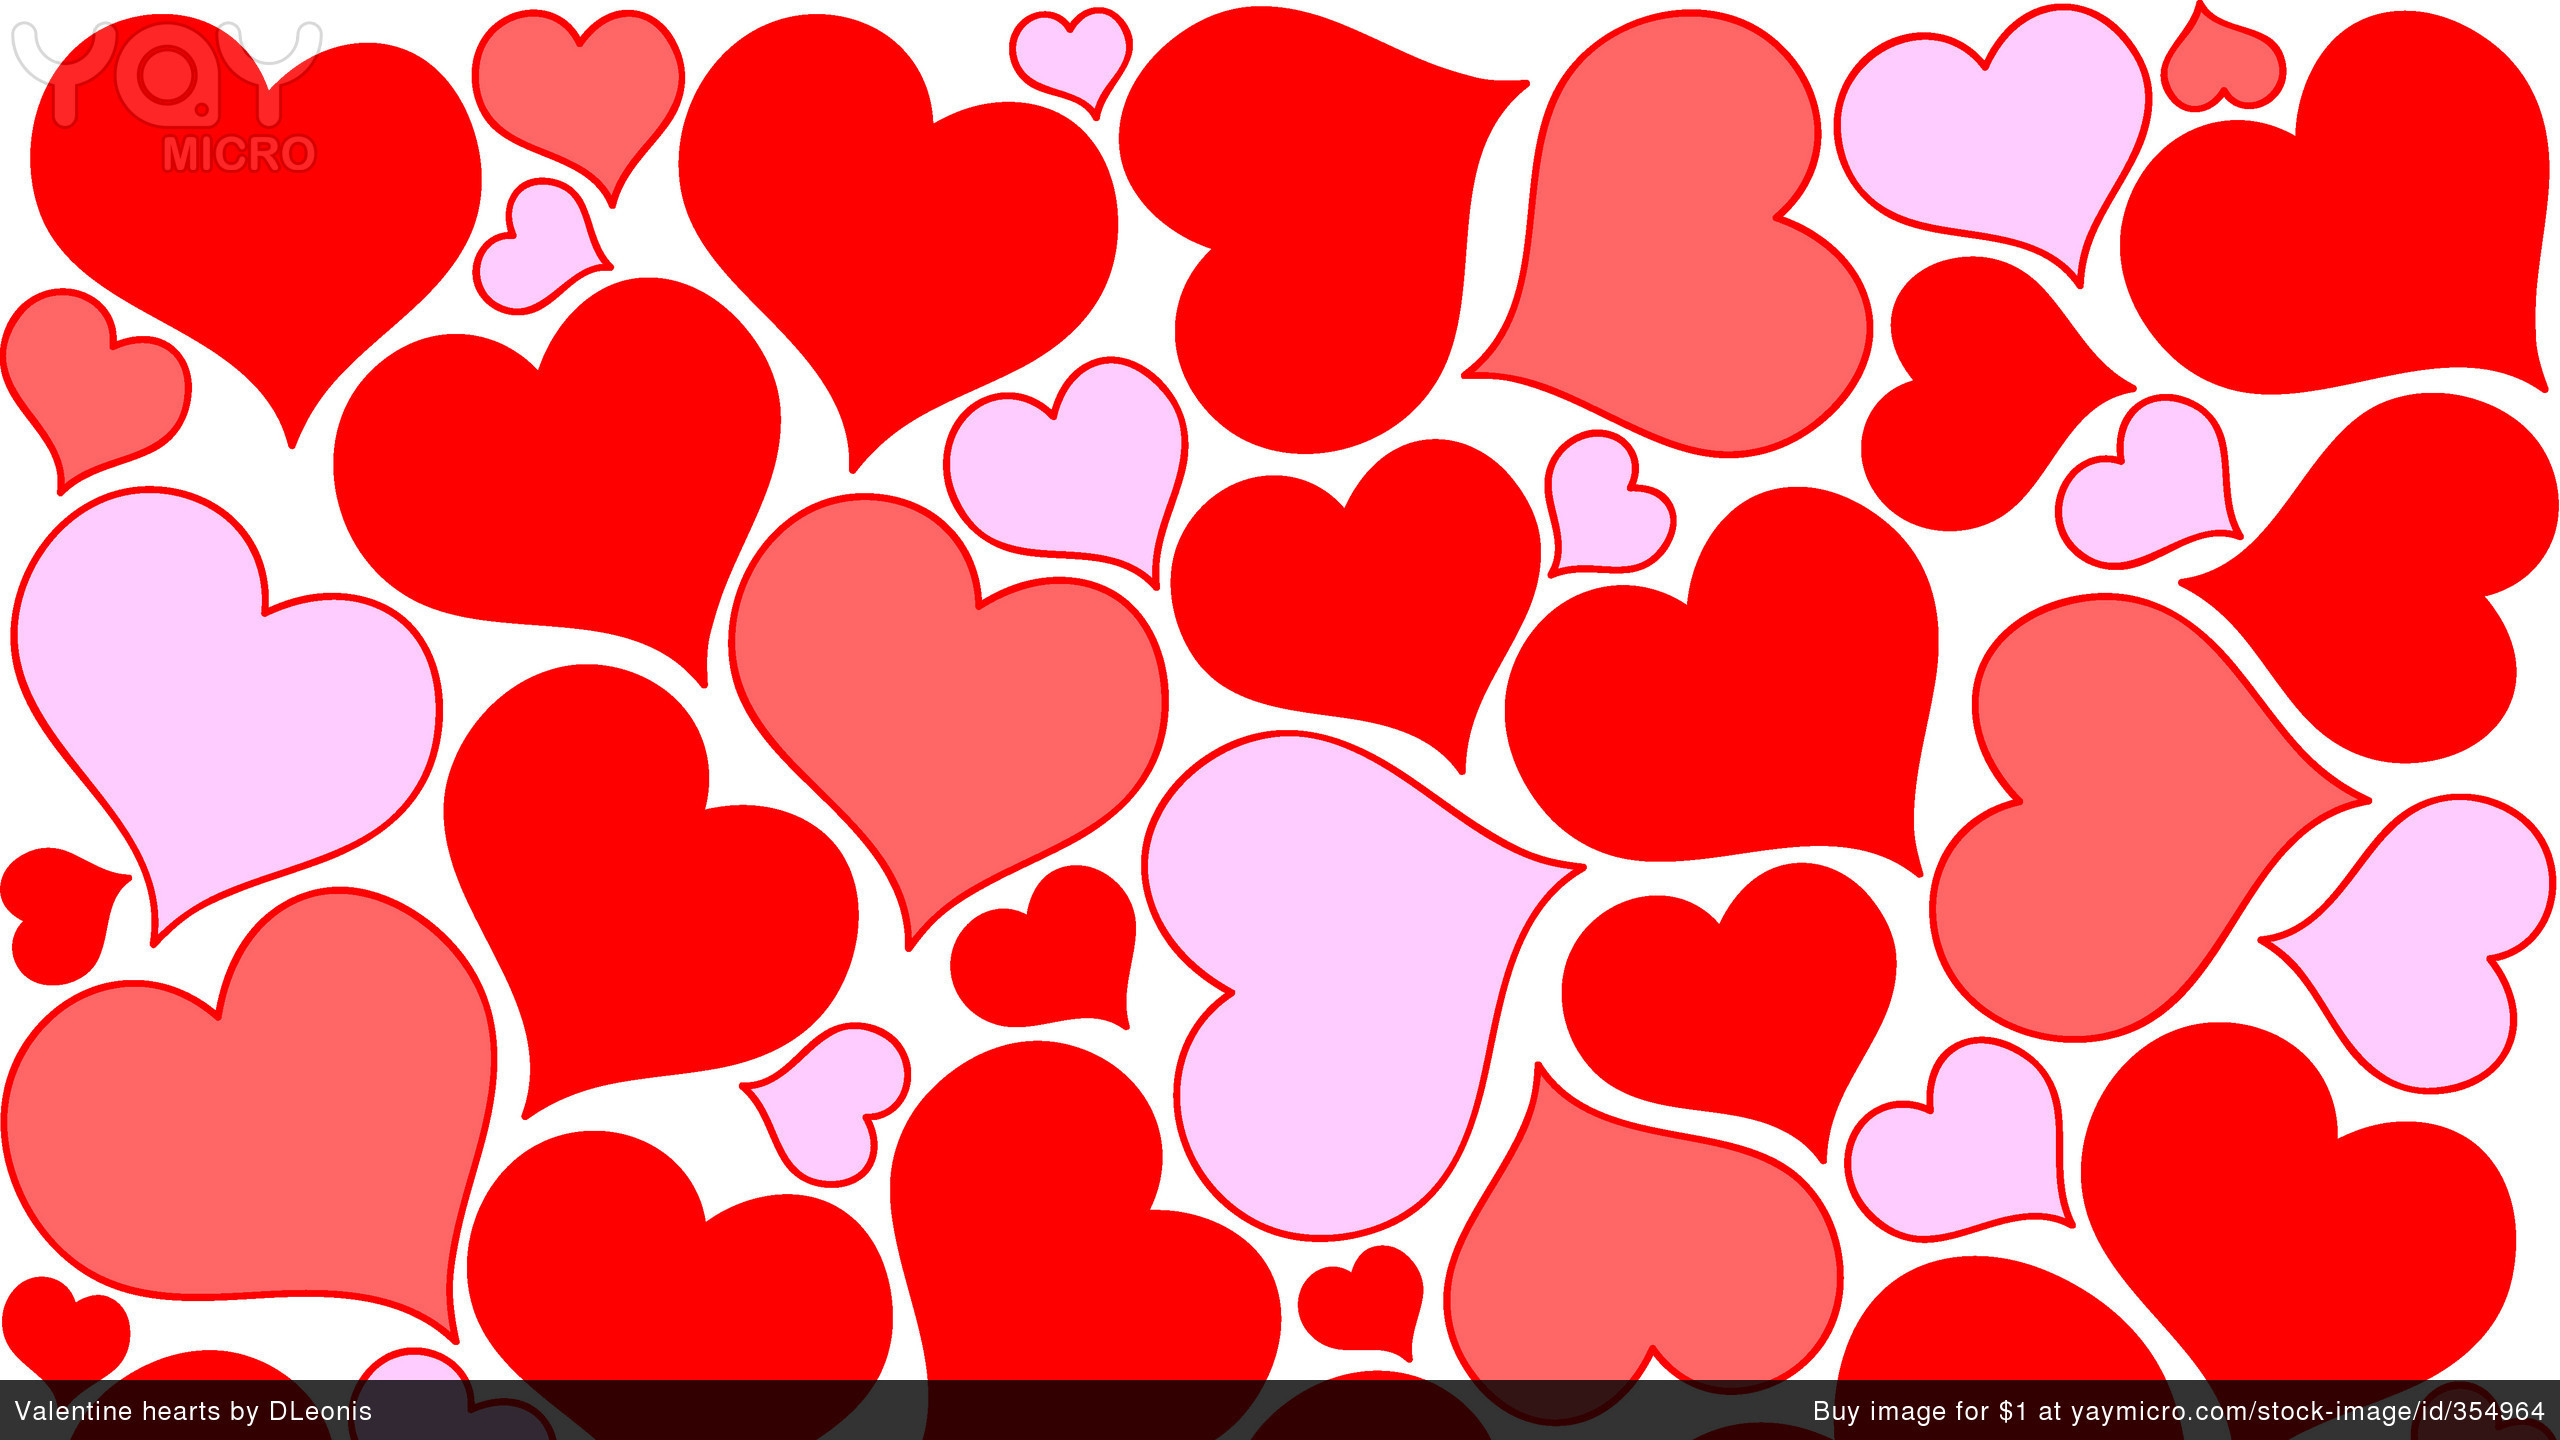 2560x1440 Free Wallpapers for Desktop - Valentine Hearts Valentine Heart